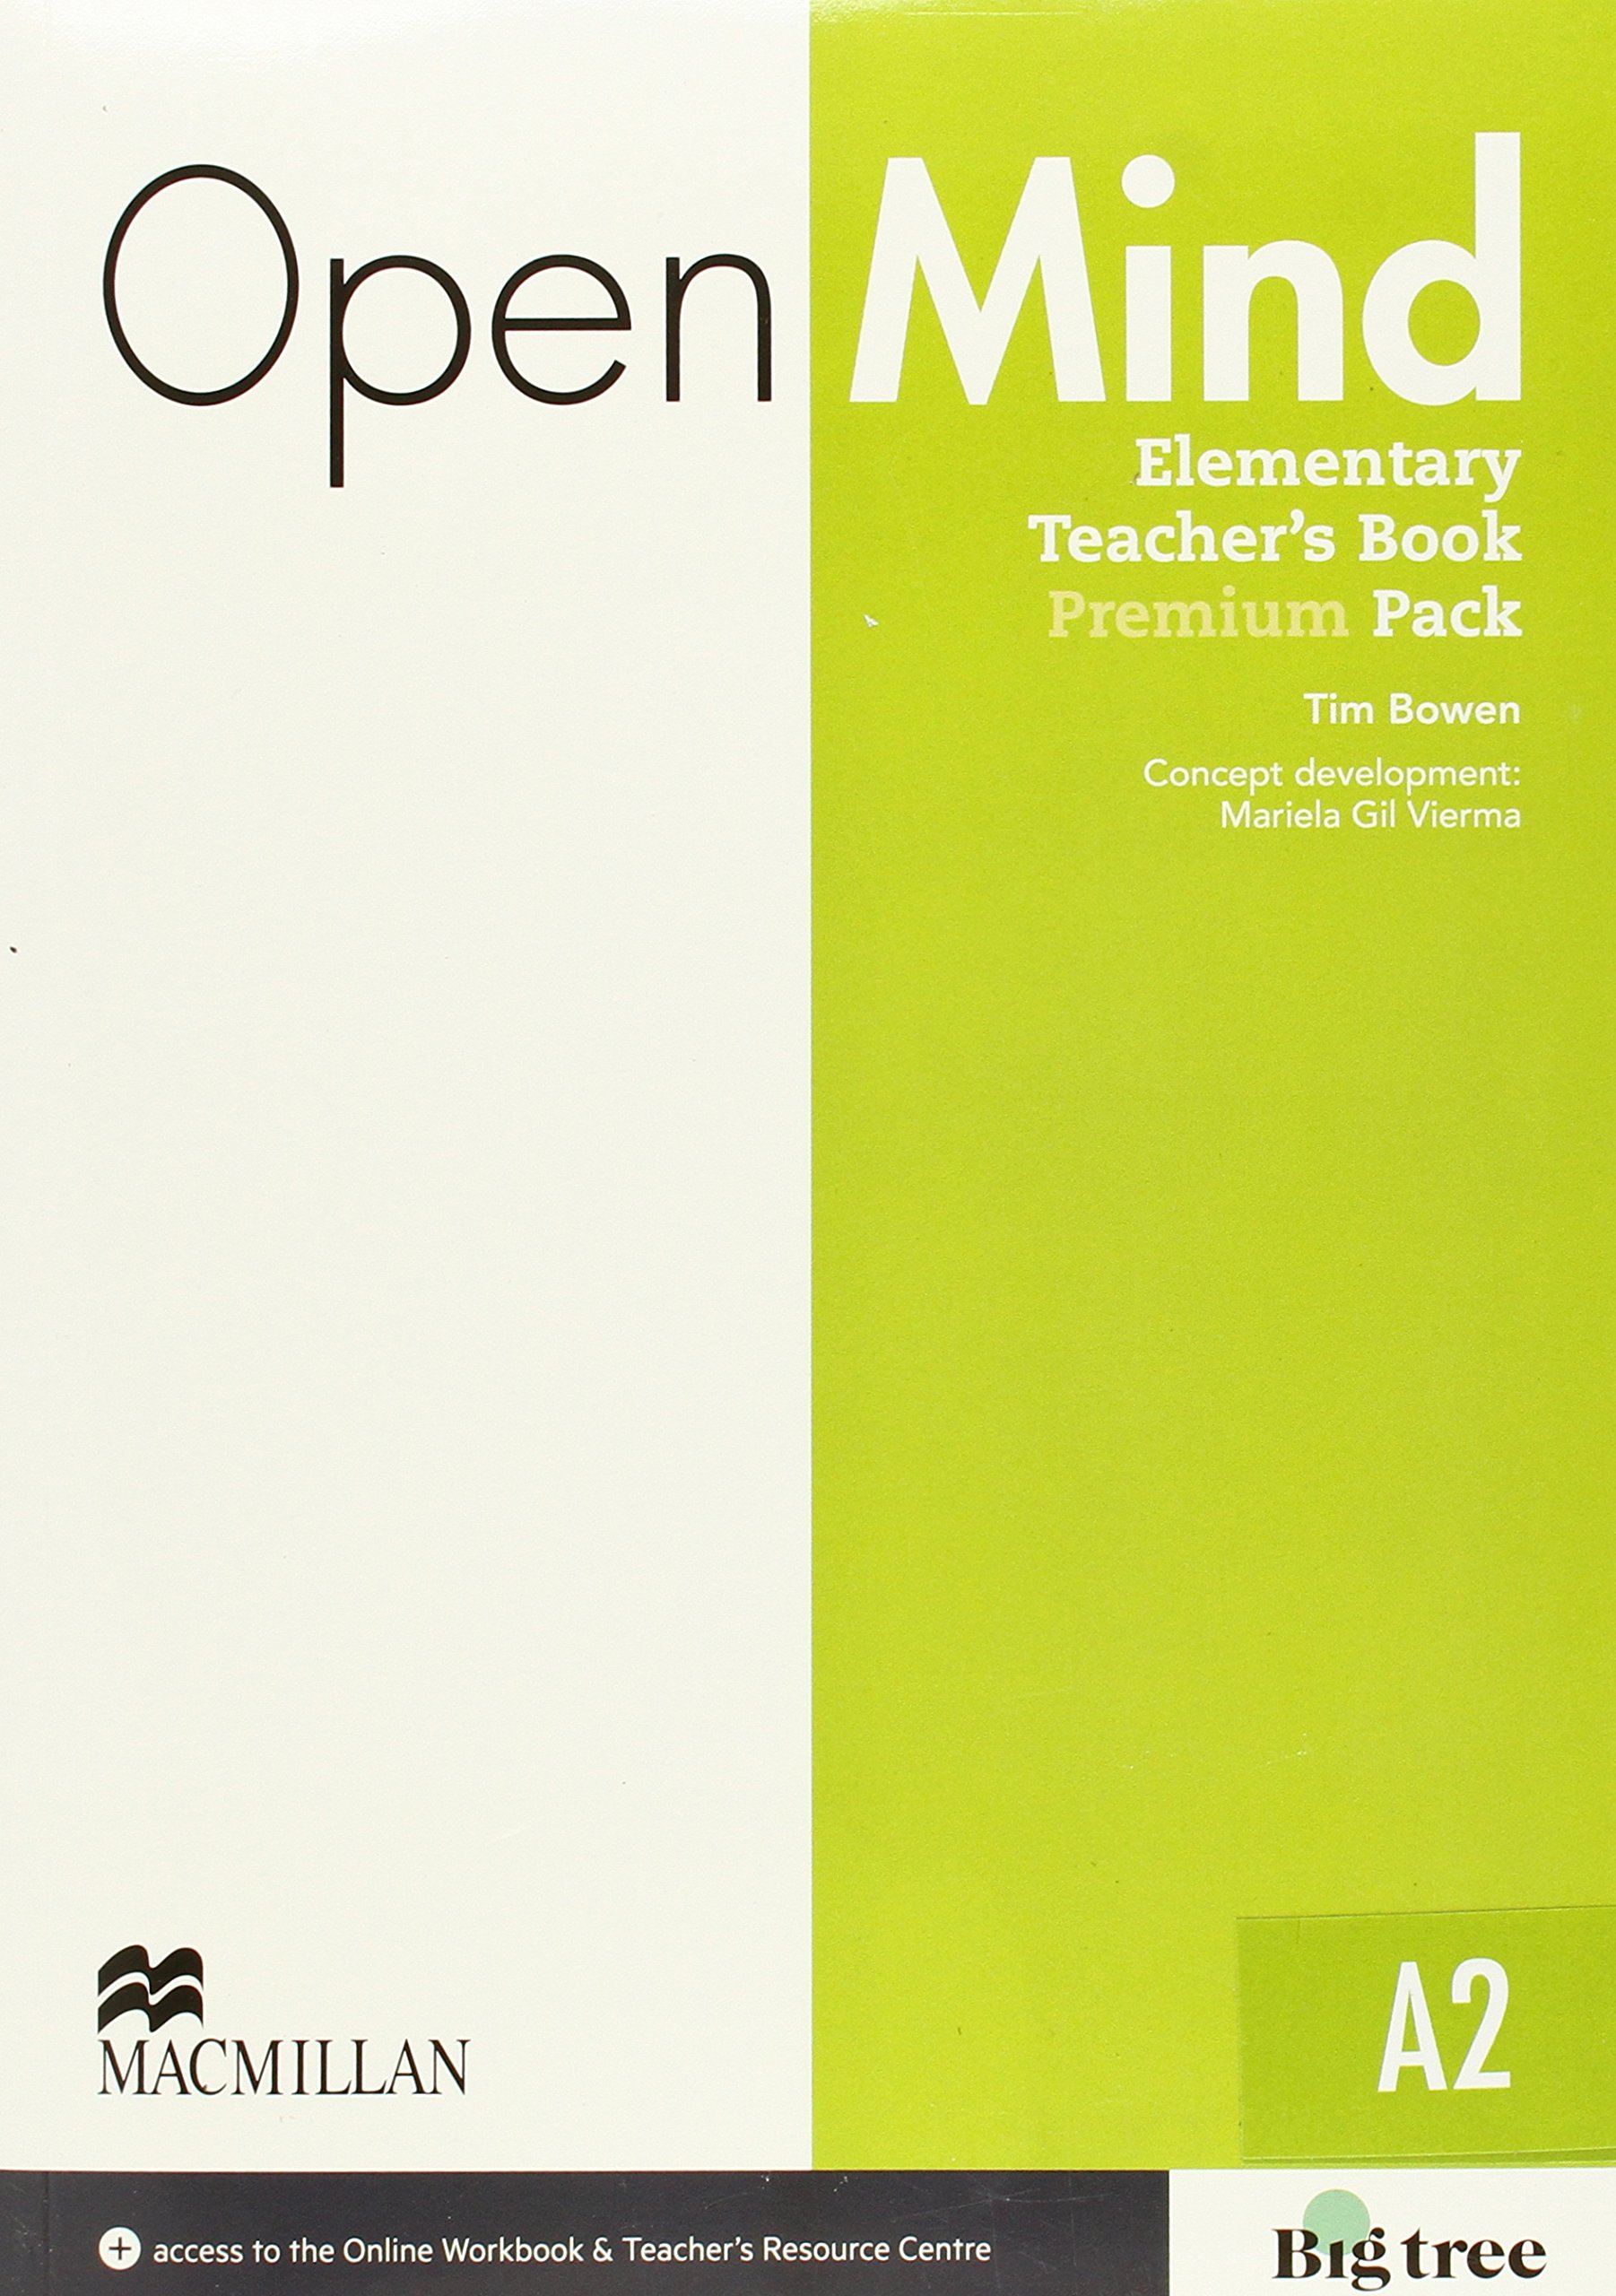 OPEN MIND ELEMENTARY Teacher's  Book Premium Pack